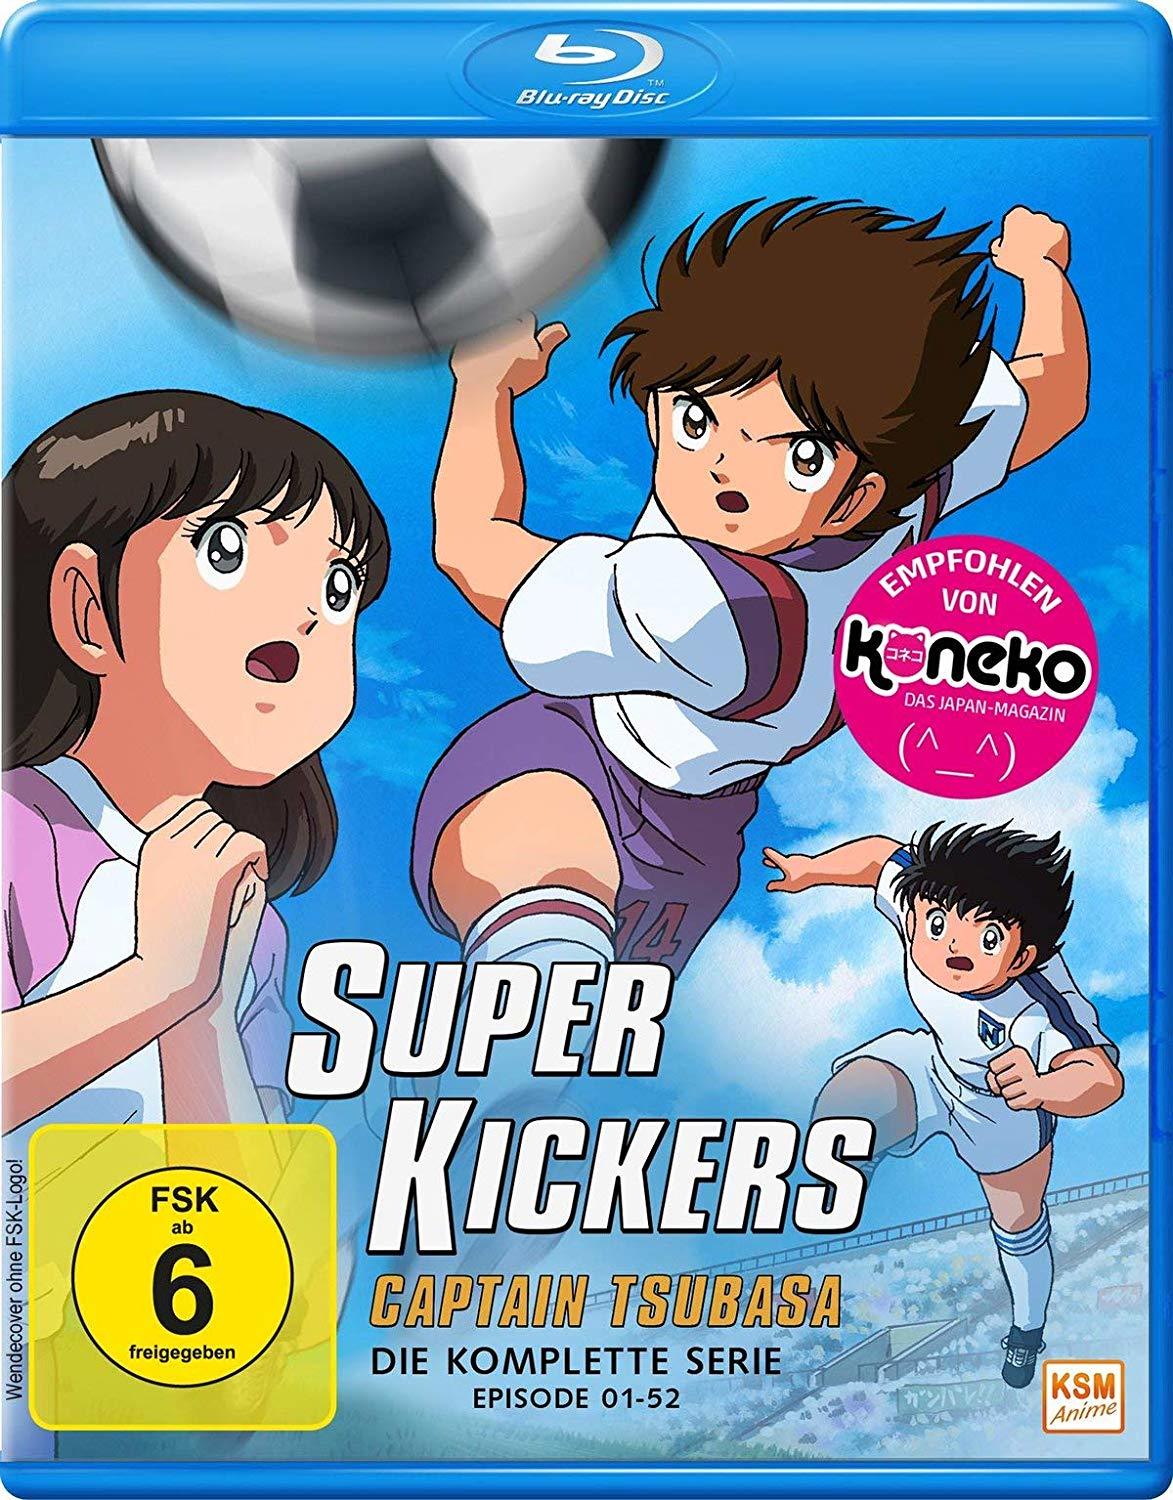 Captain Tsubasa Road To 02 Blu Ray Release Date April 25 19 Captain Tsubasa Super Kickers Die Komplette Serie Germany